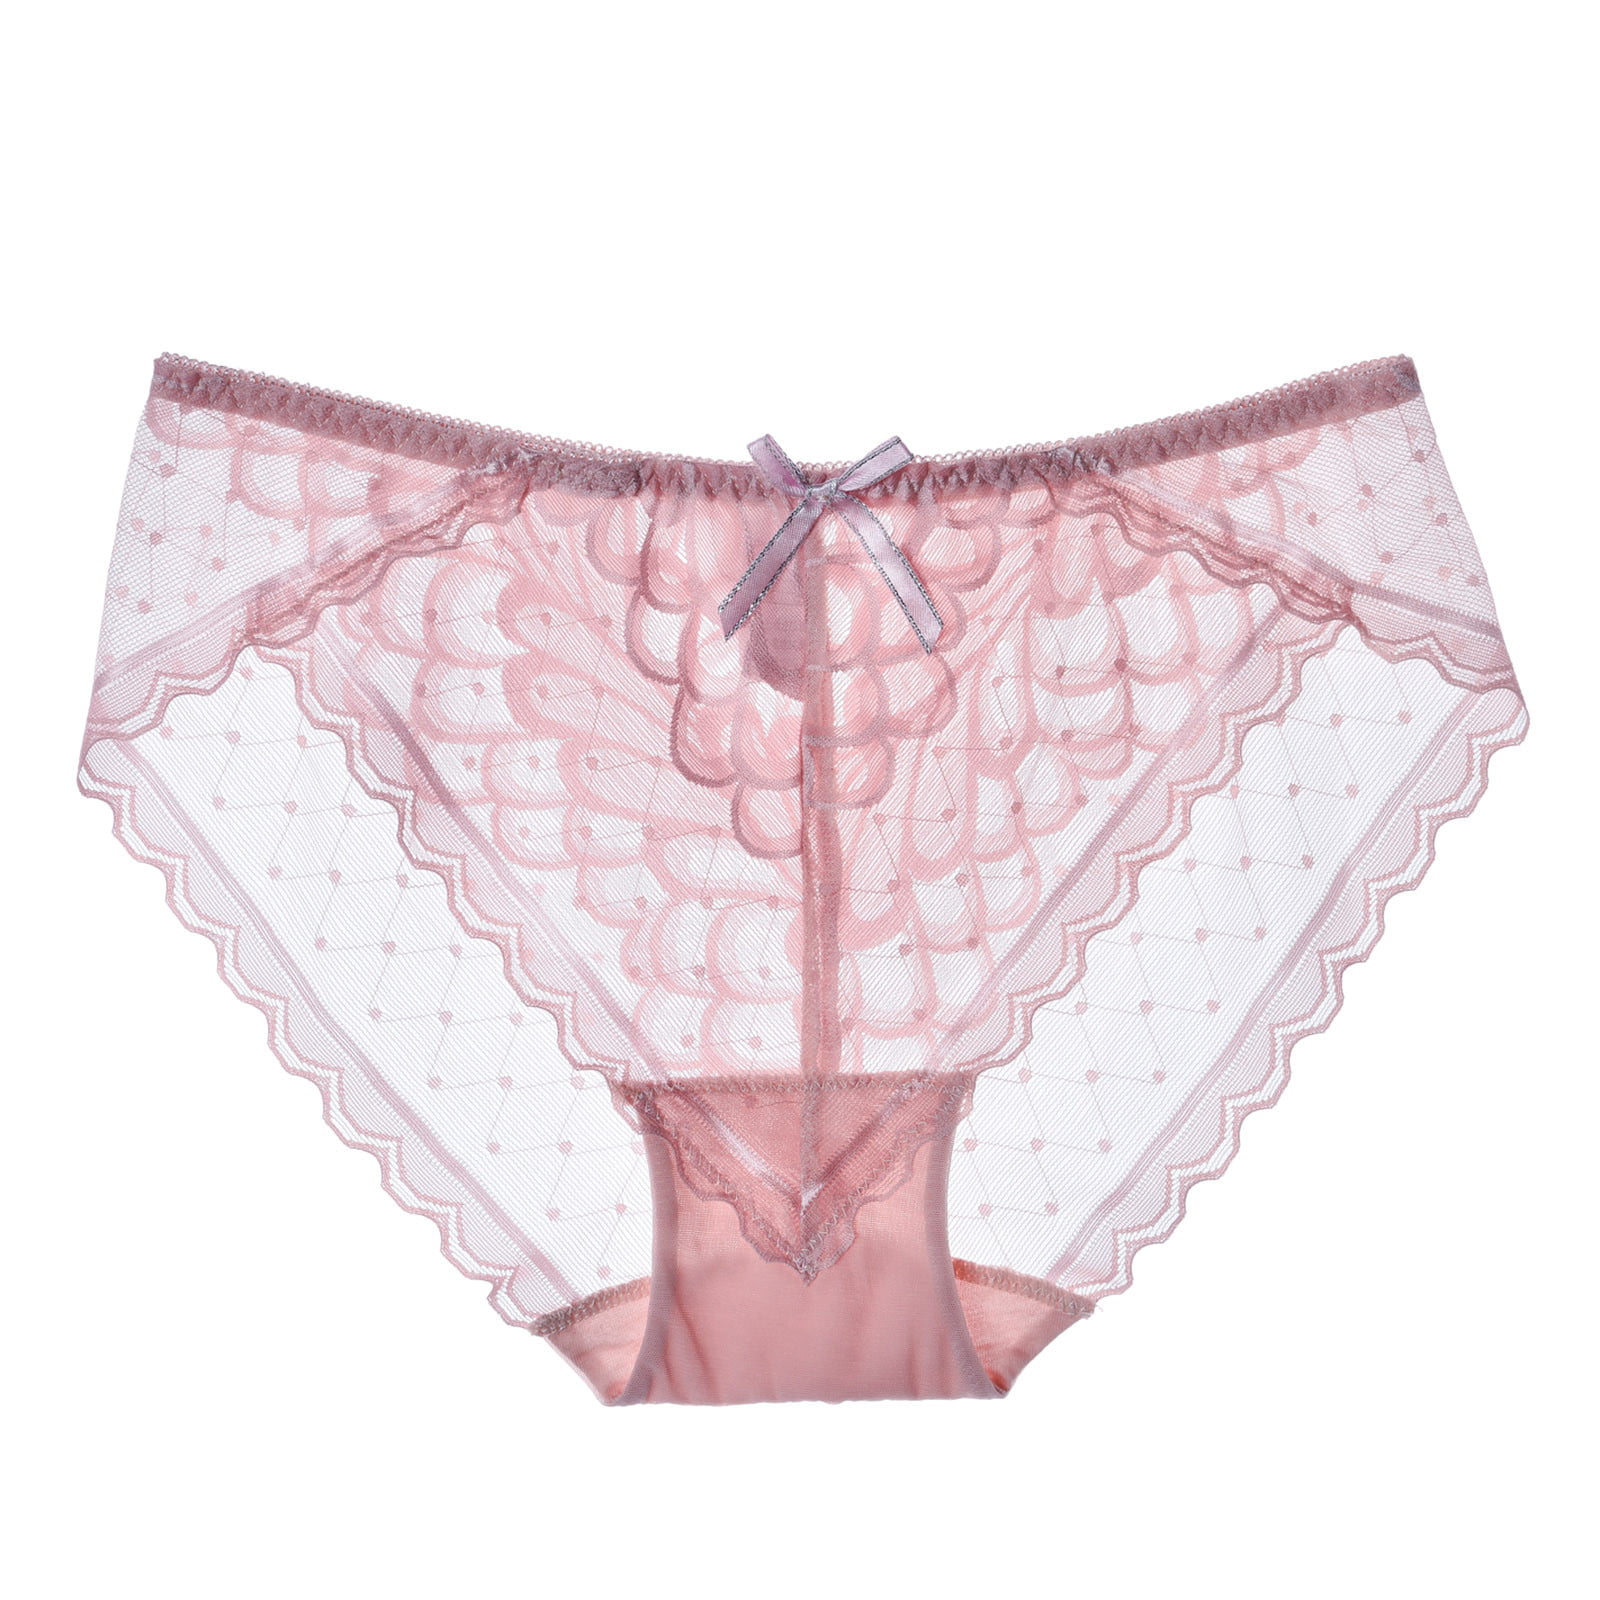 TAIAOJING 6 Pack Cotton Underwear For Women Underwear Cotton